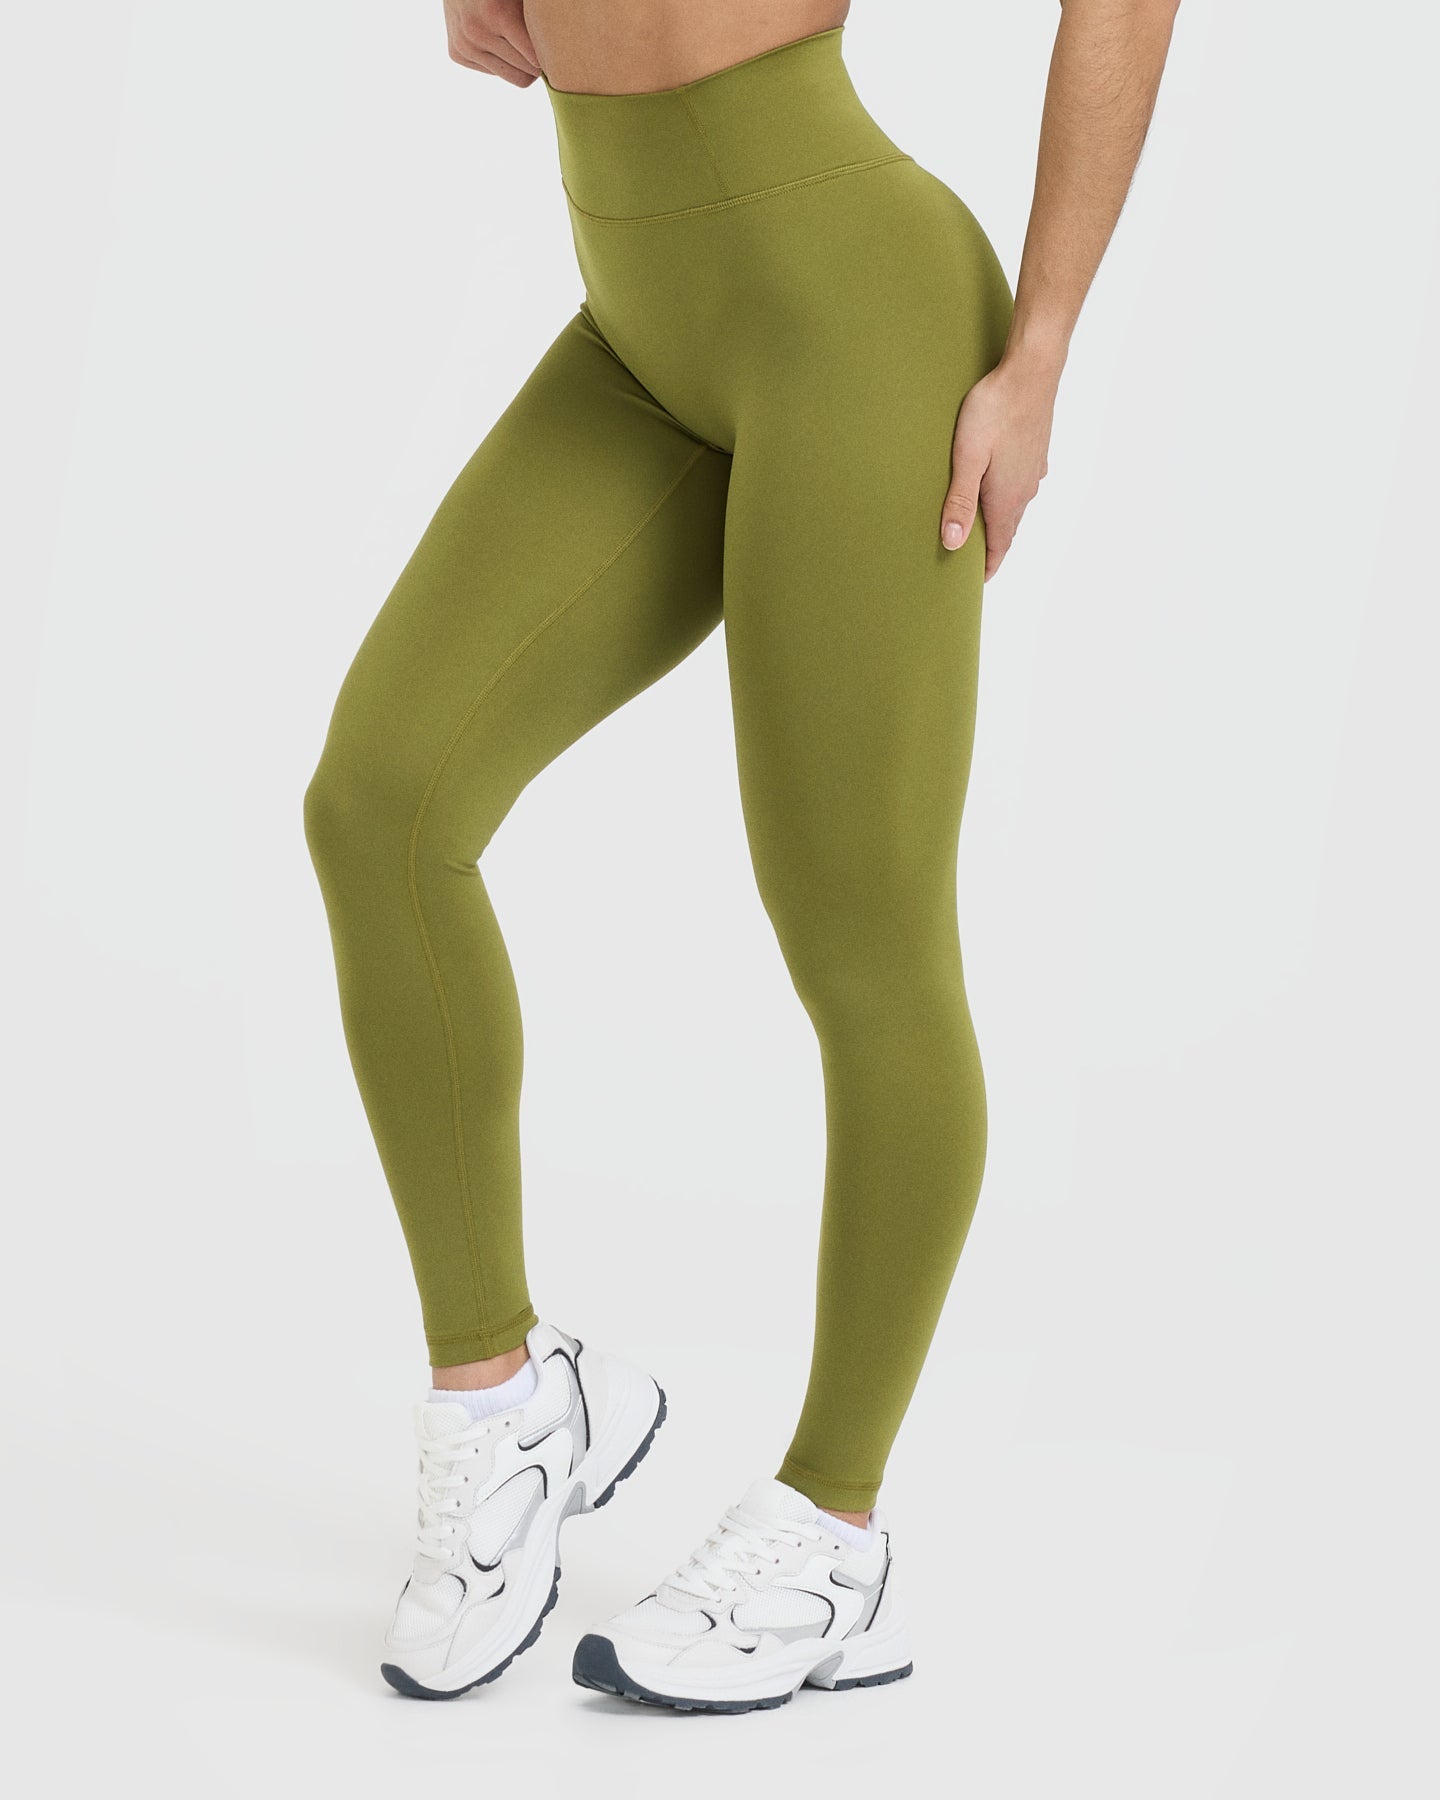 Prana Transform Leggings Olive Green